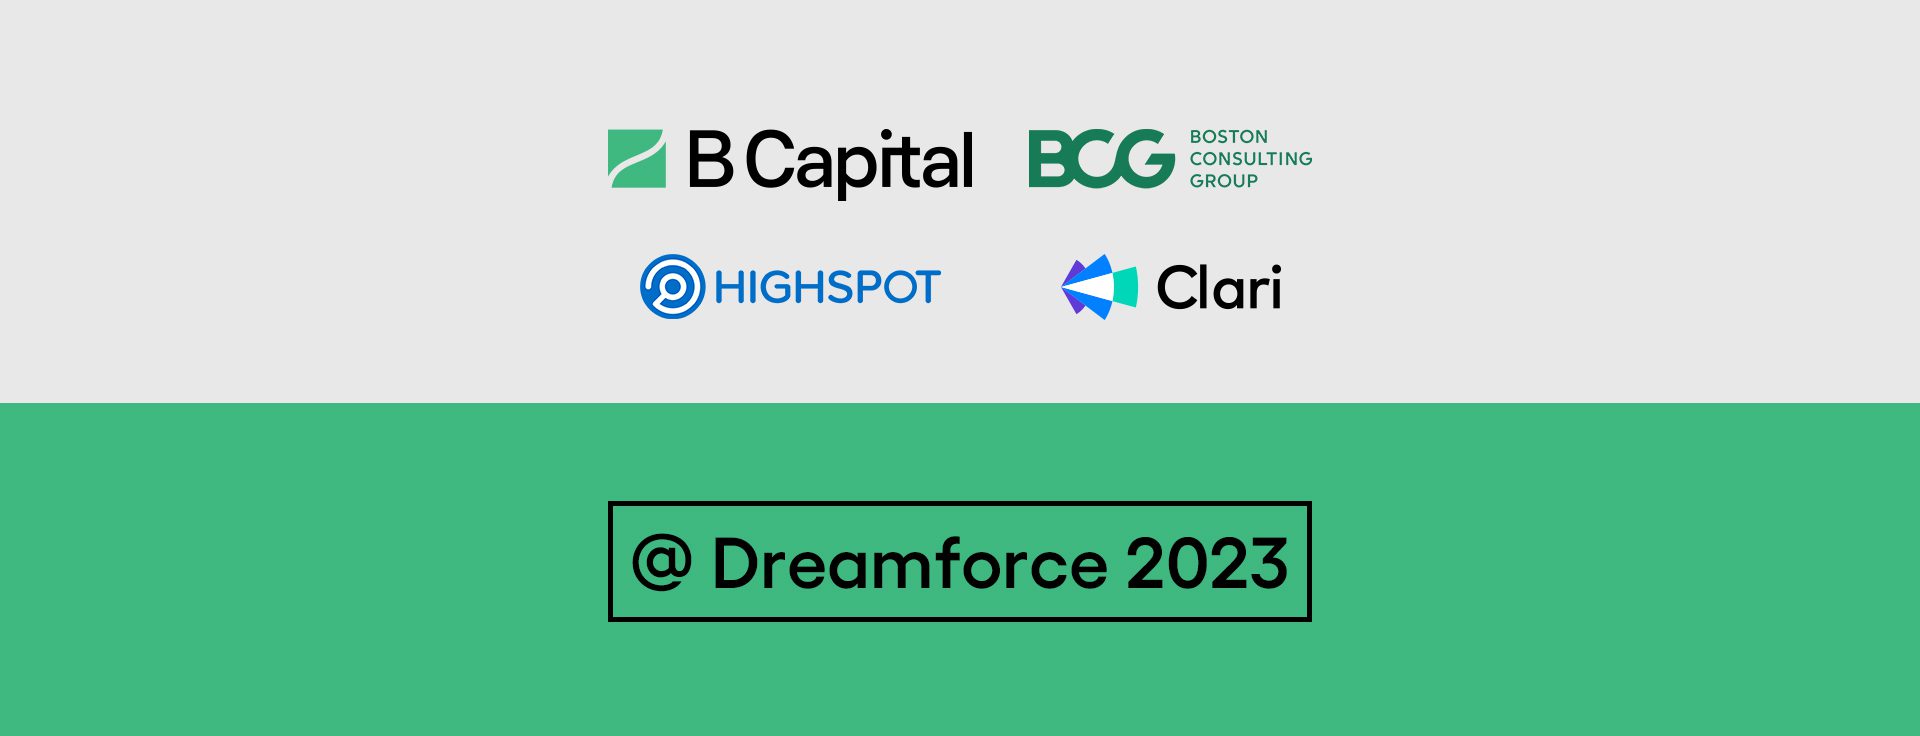 B Capital and BCG Dreamforce 2023